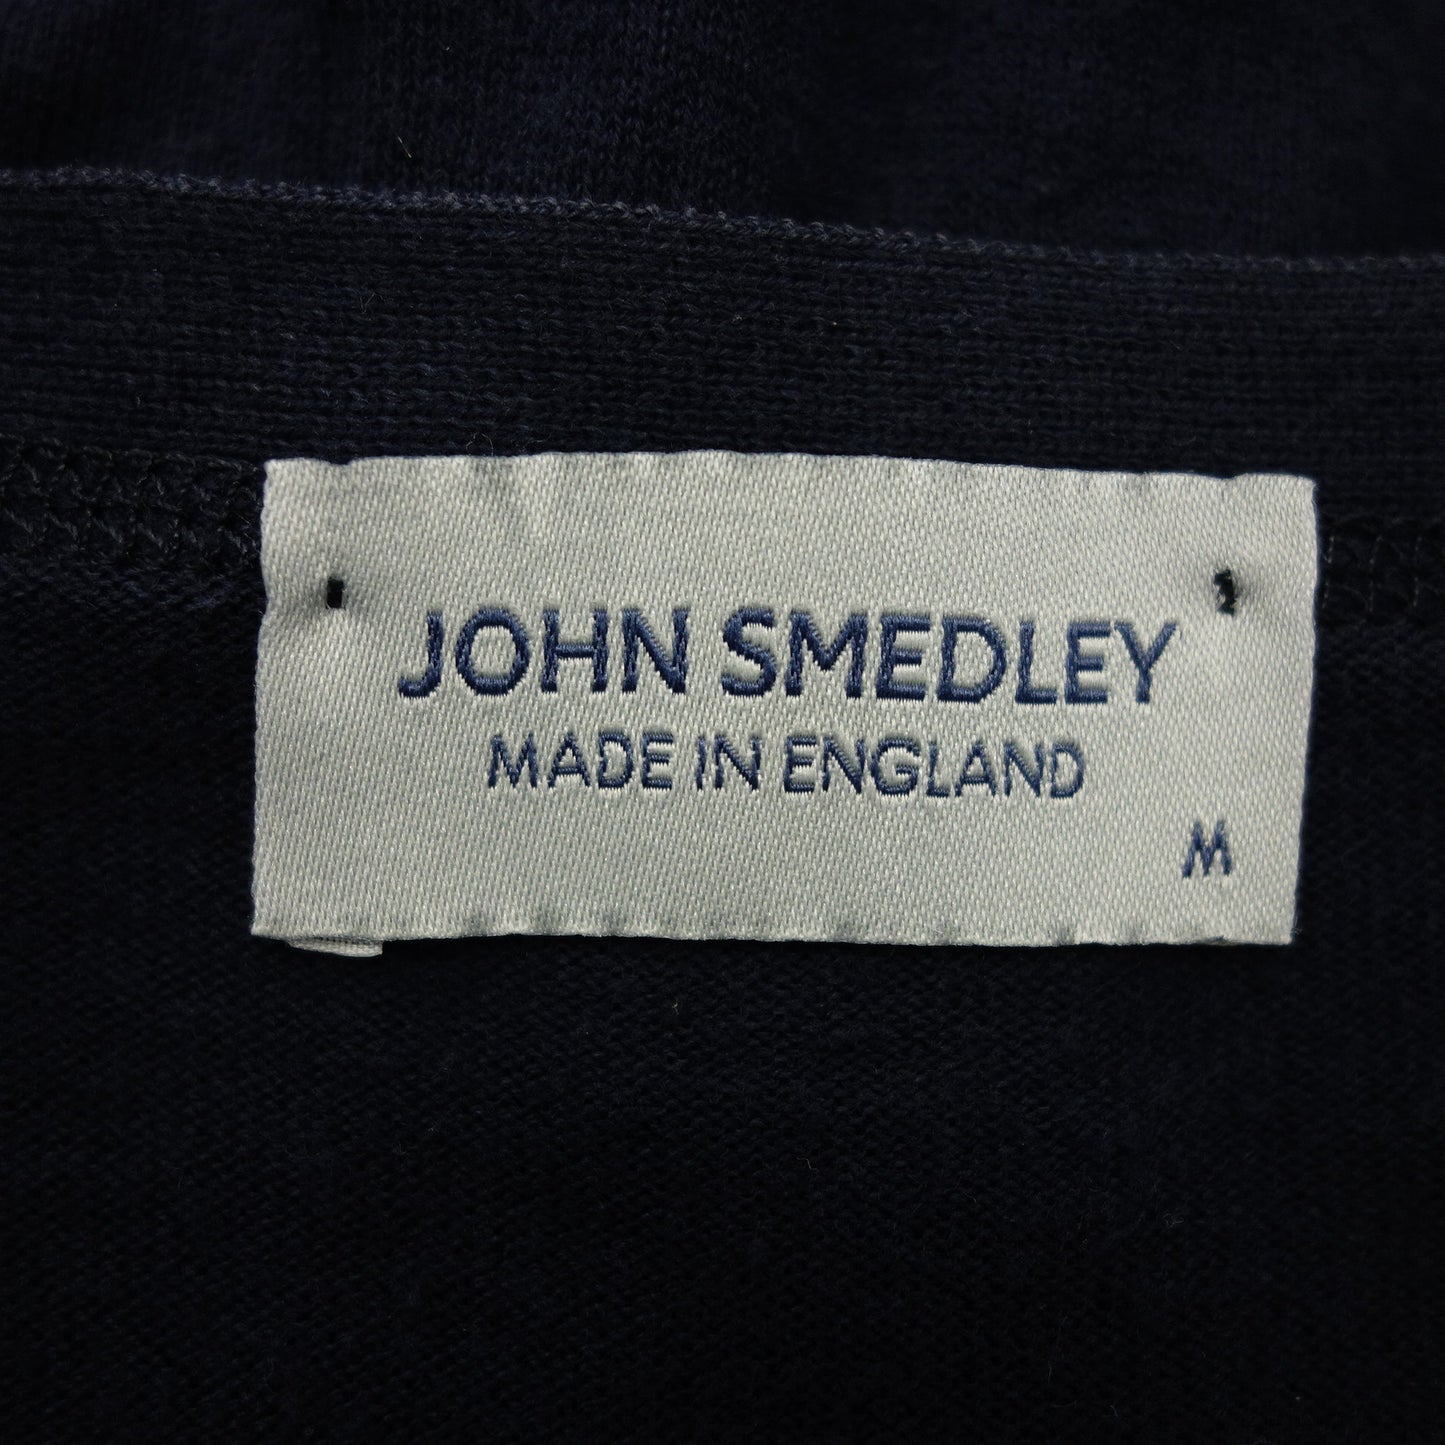 JOHN SMEDLEY Cardigan Sea Island Cotton Long Sleeve M Men's Navy JOHN SMEDLEY [AFB26] [Used] 